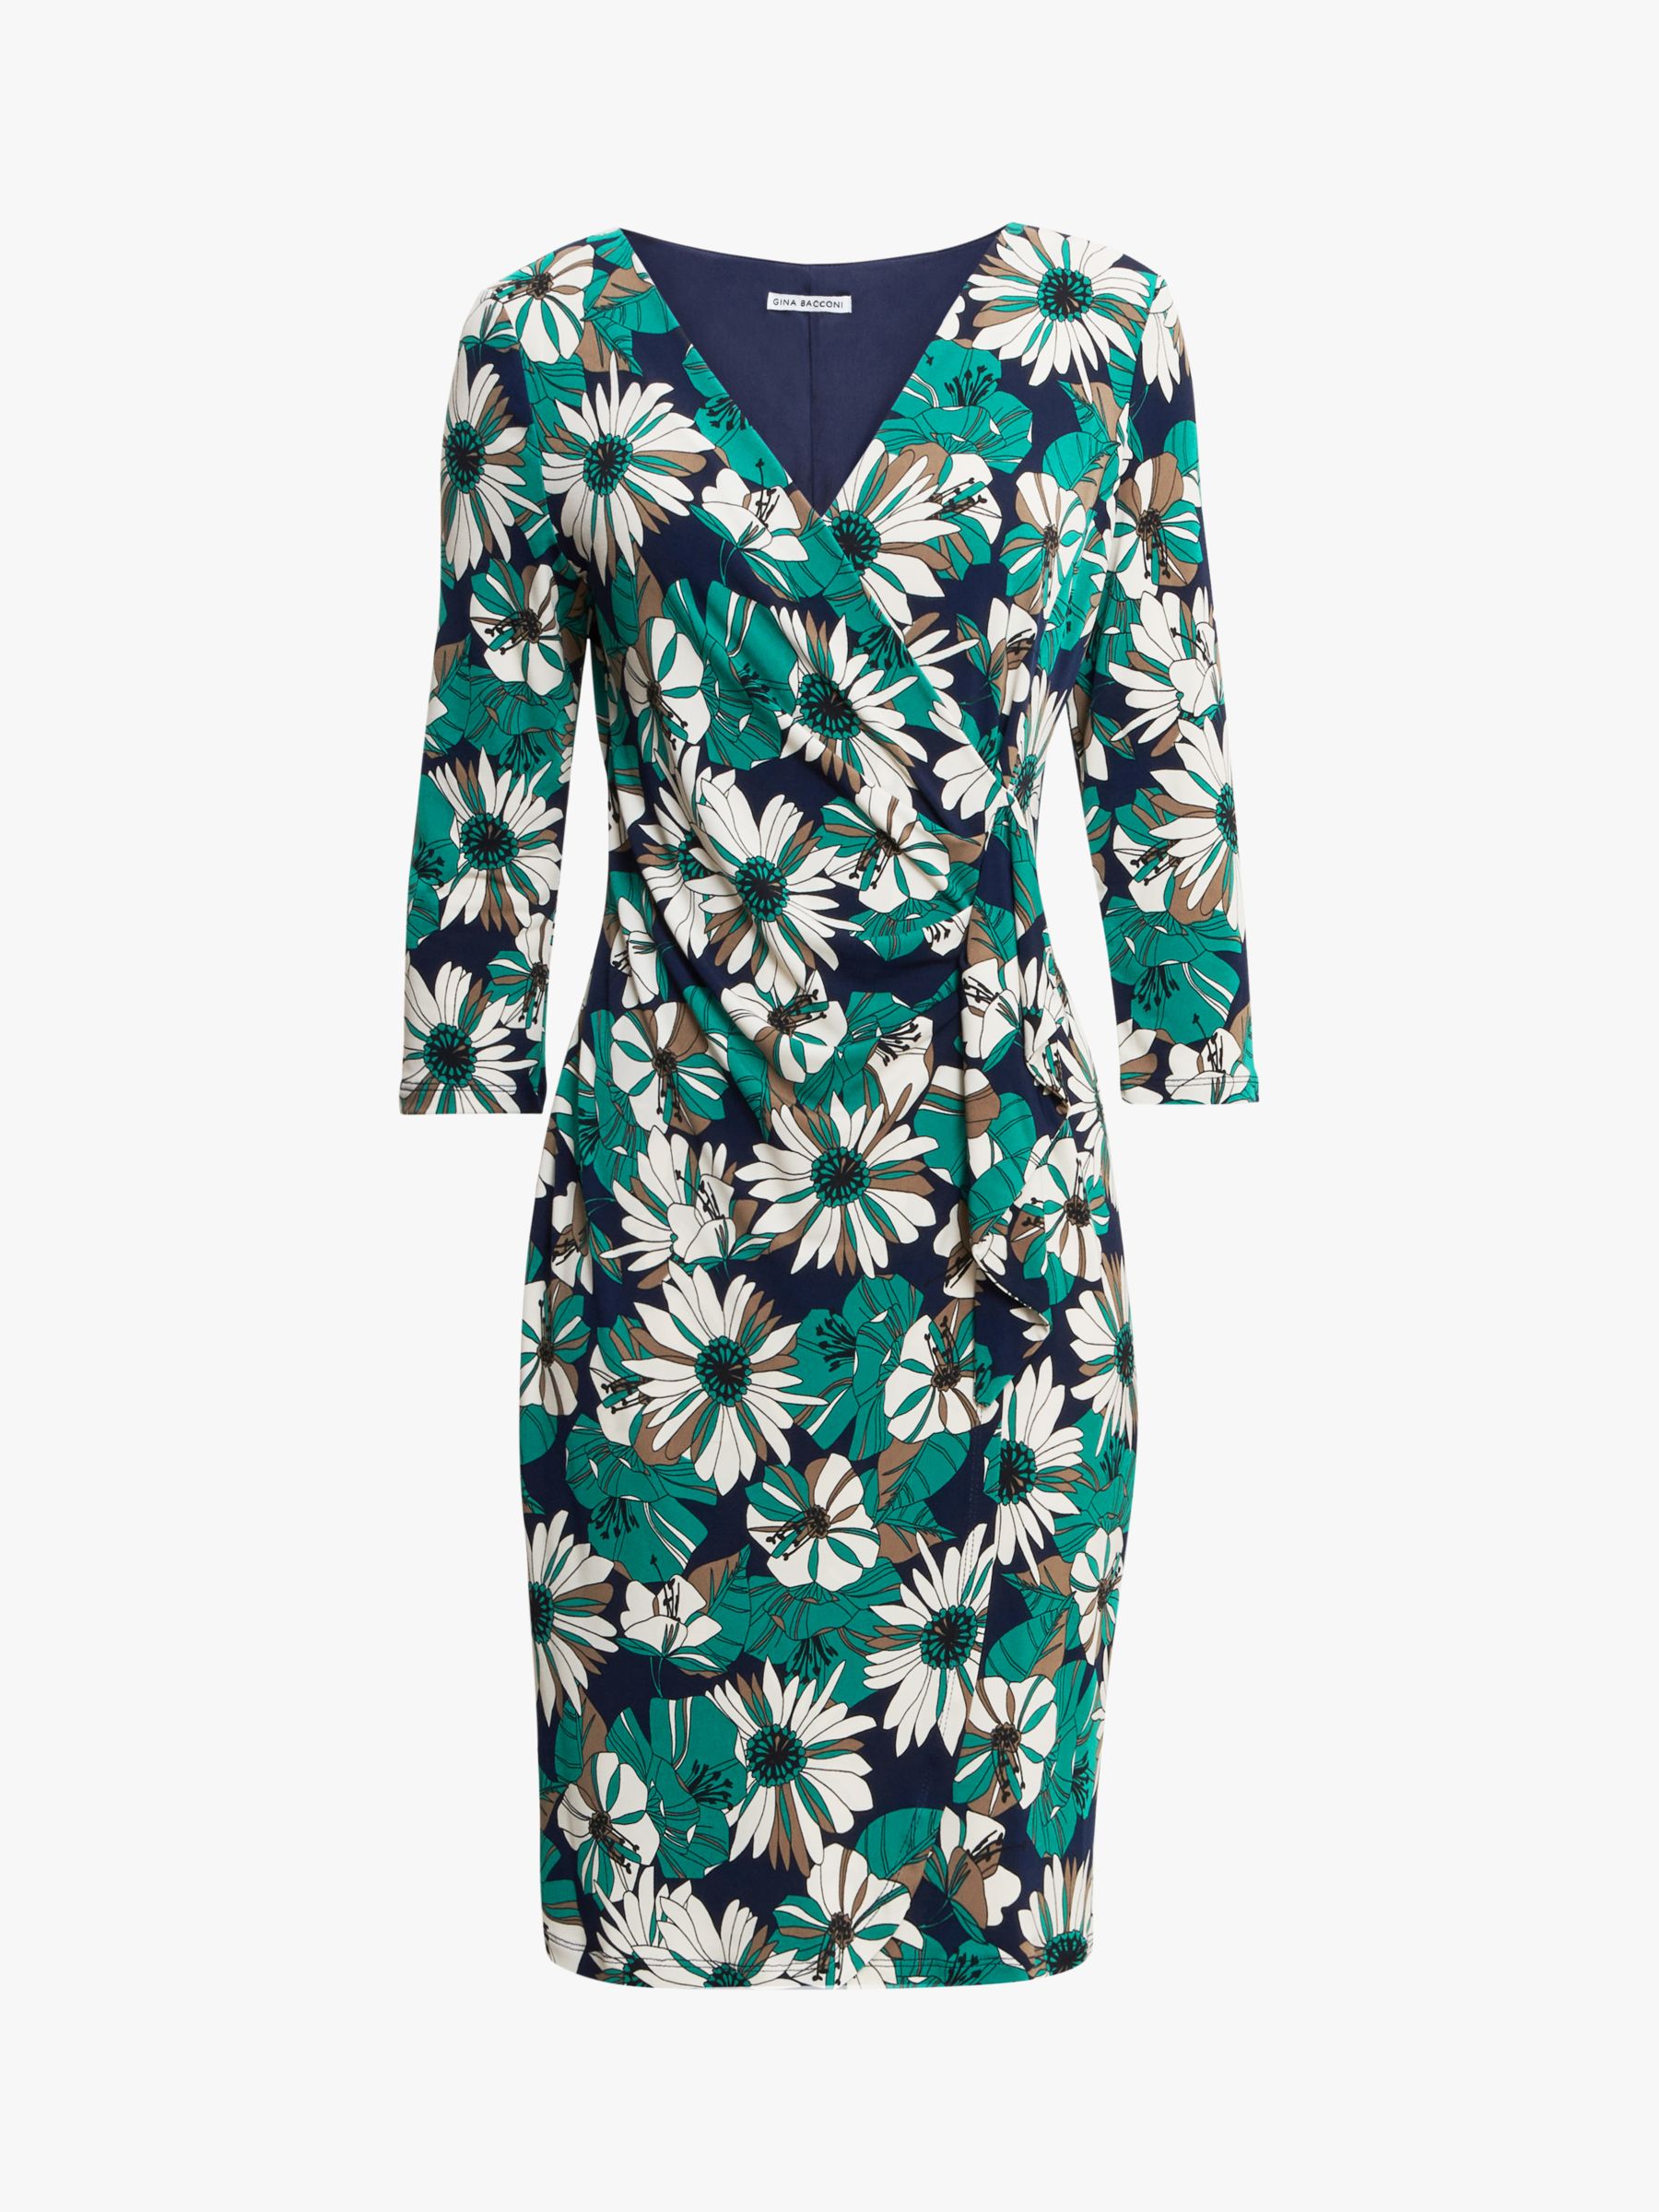 Buy Gina Bacconi Talie Floral Print Jersey Dress, Navy/Green Online at johnlewis.com